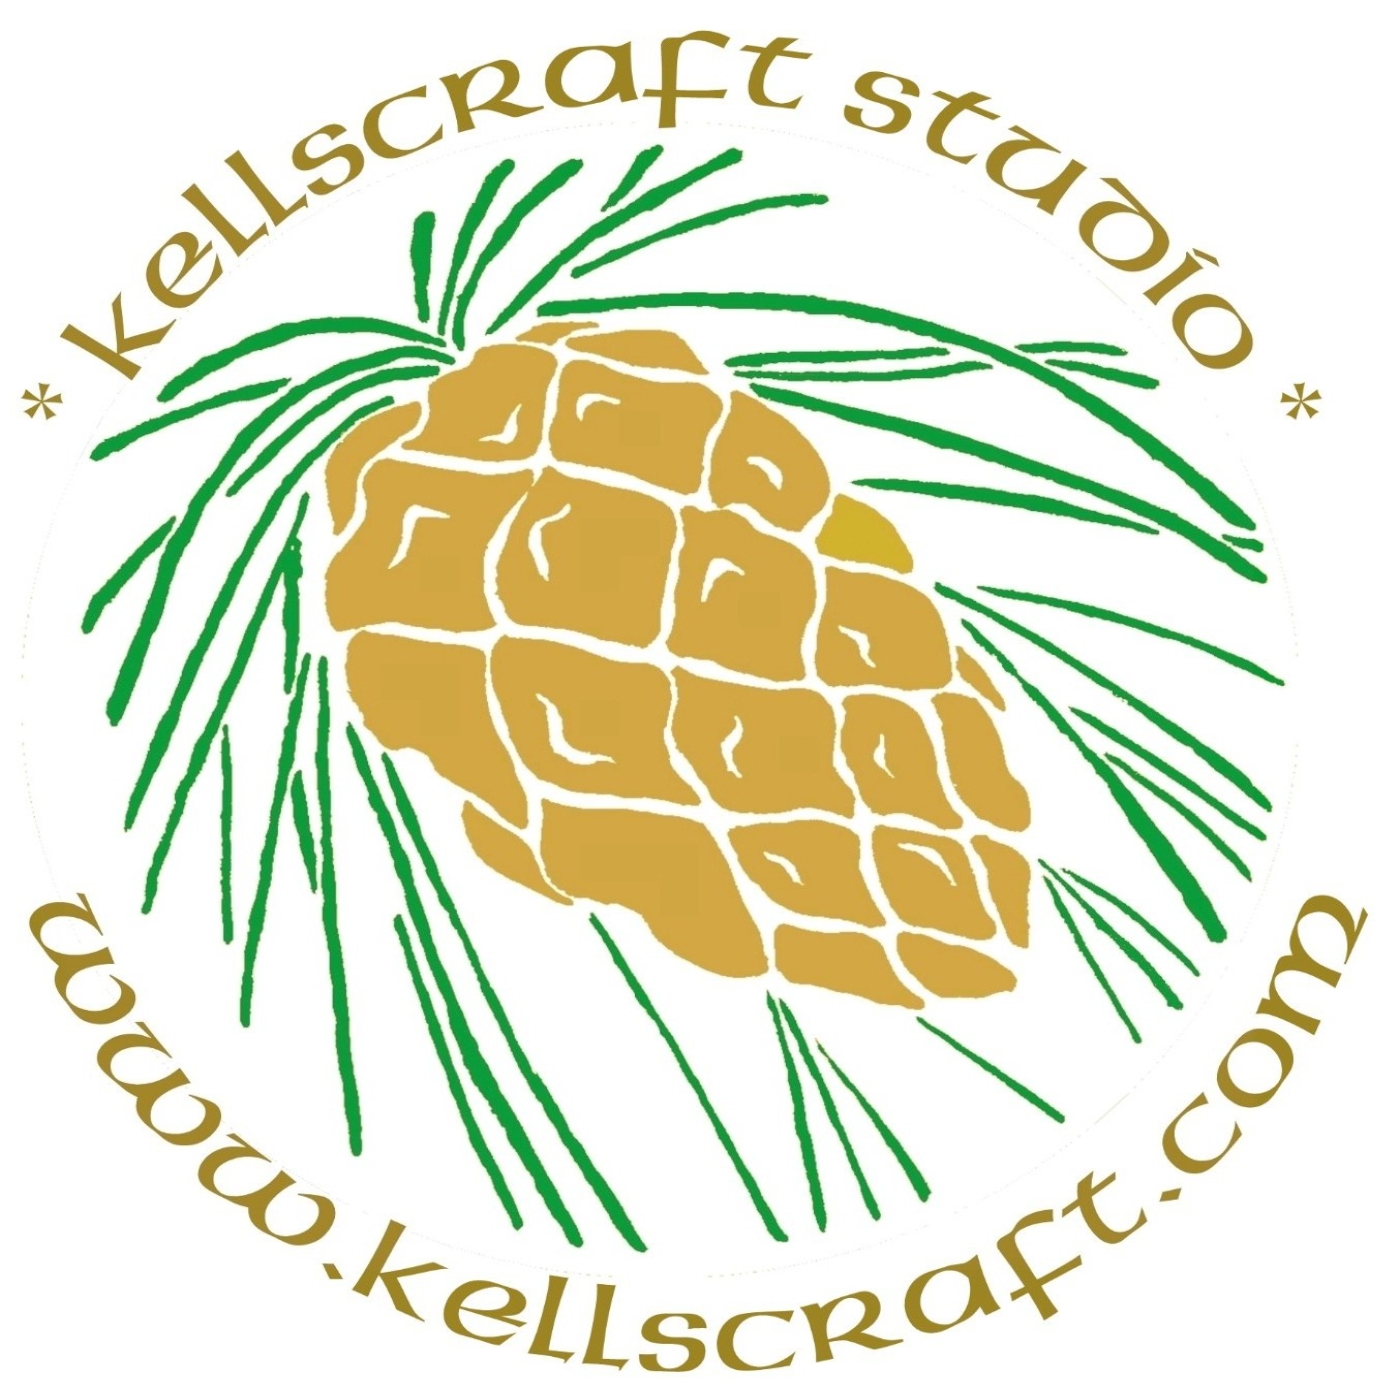 Kellscraft Studion Logo, copyright 1999